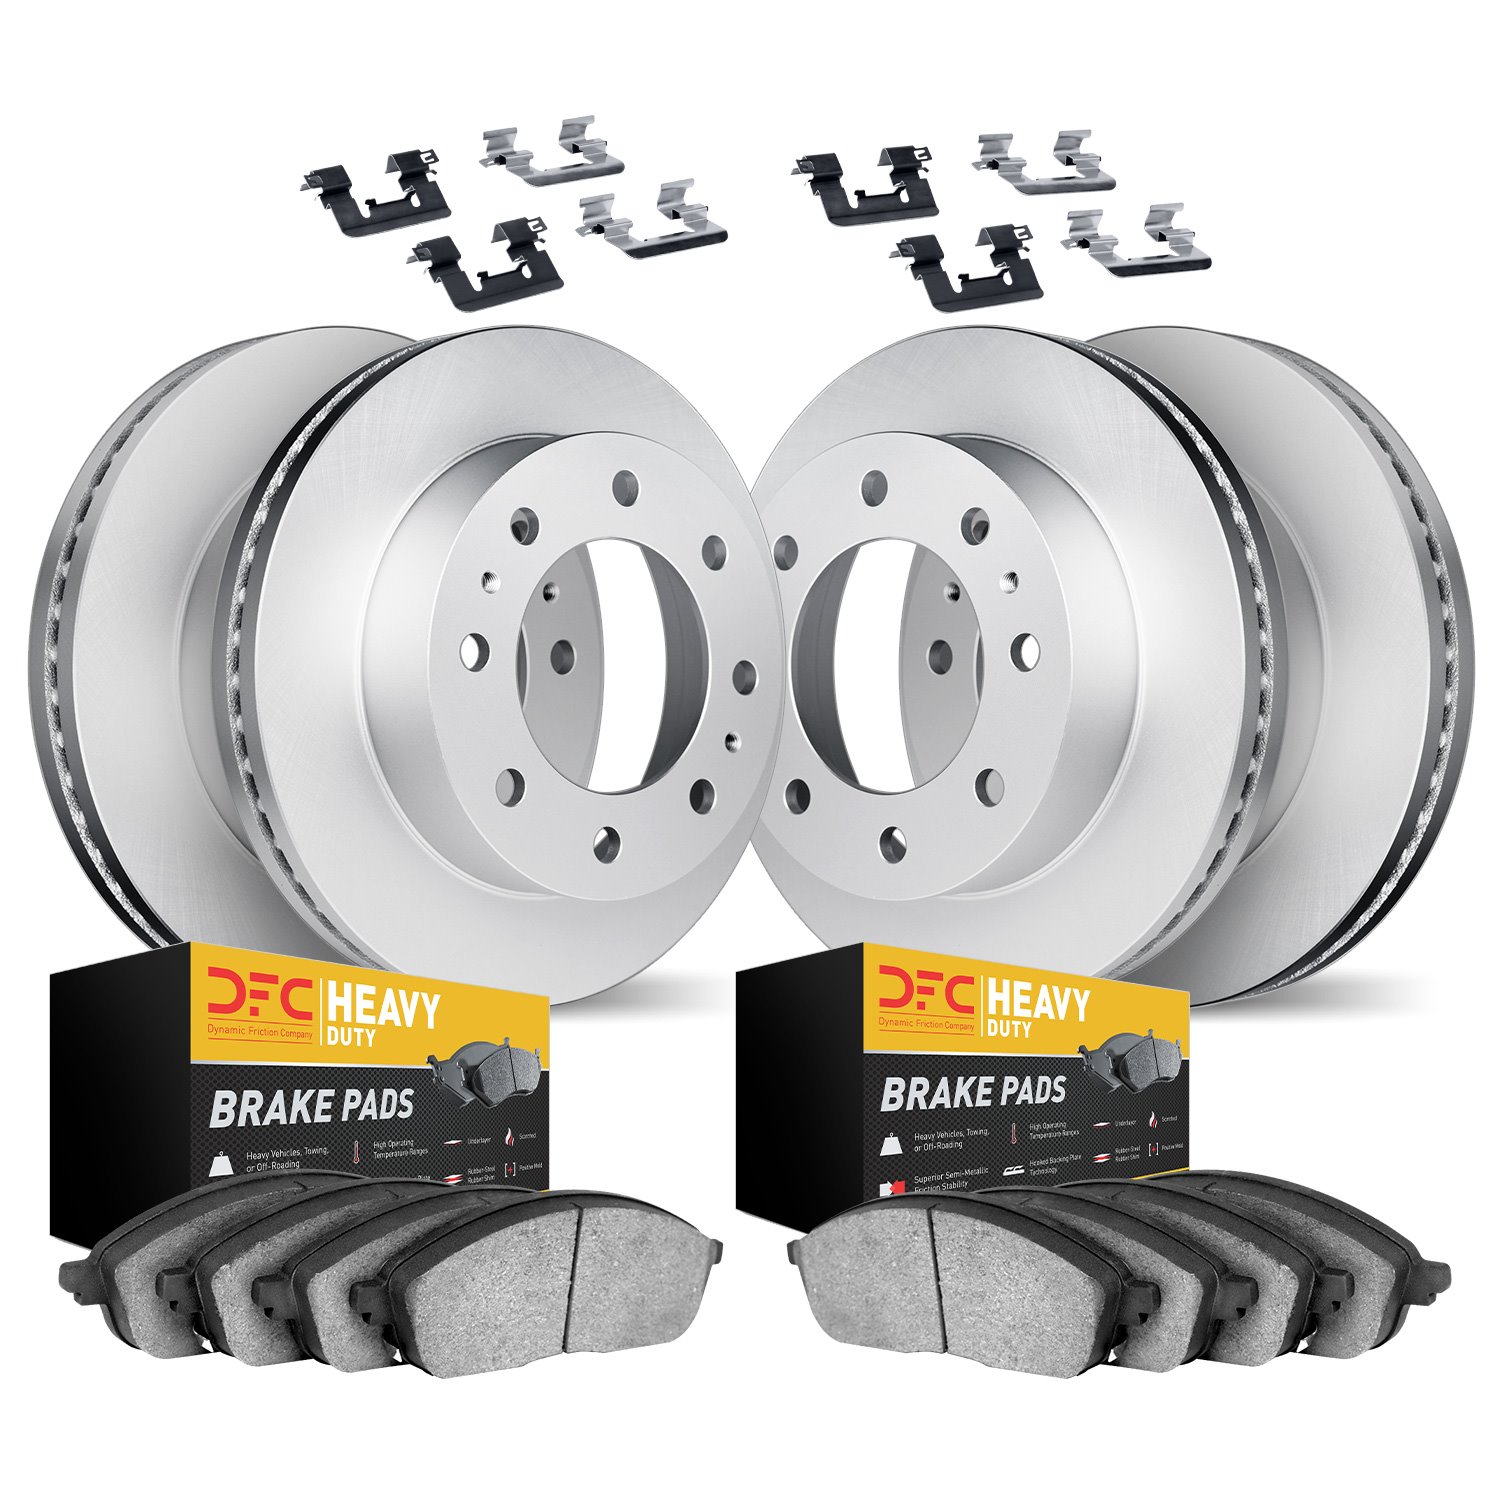 4214-48128 Geospec Brake Rotors w/Heavy-Duty Brake Pads & Hardware, 2003-2017 GM, Position: Front and Rear